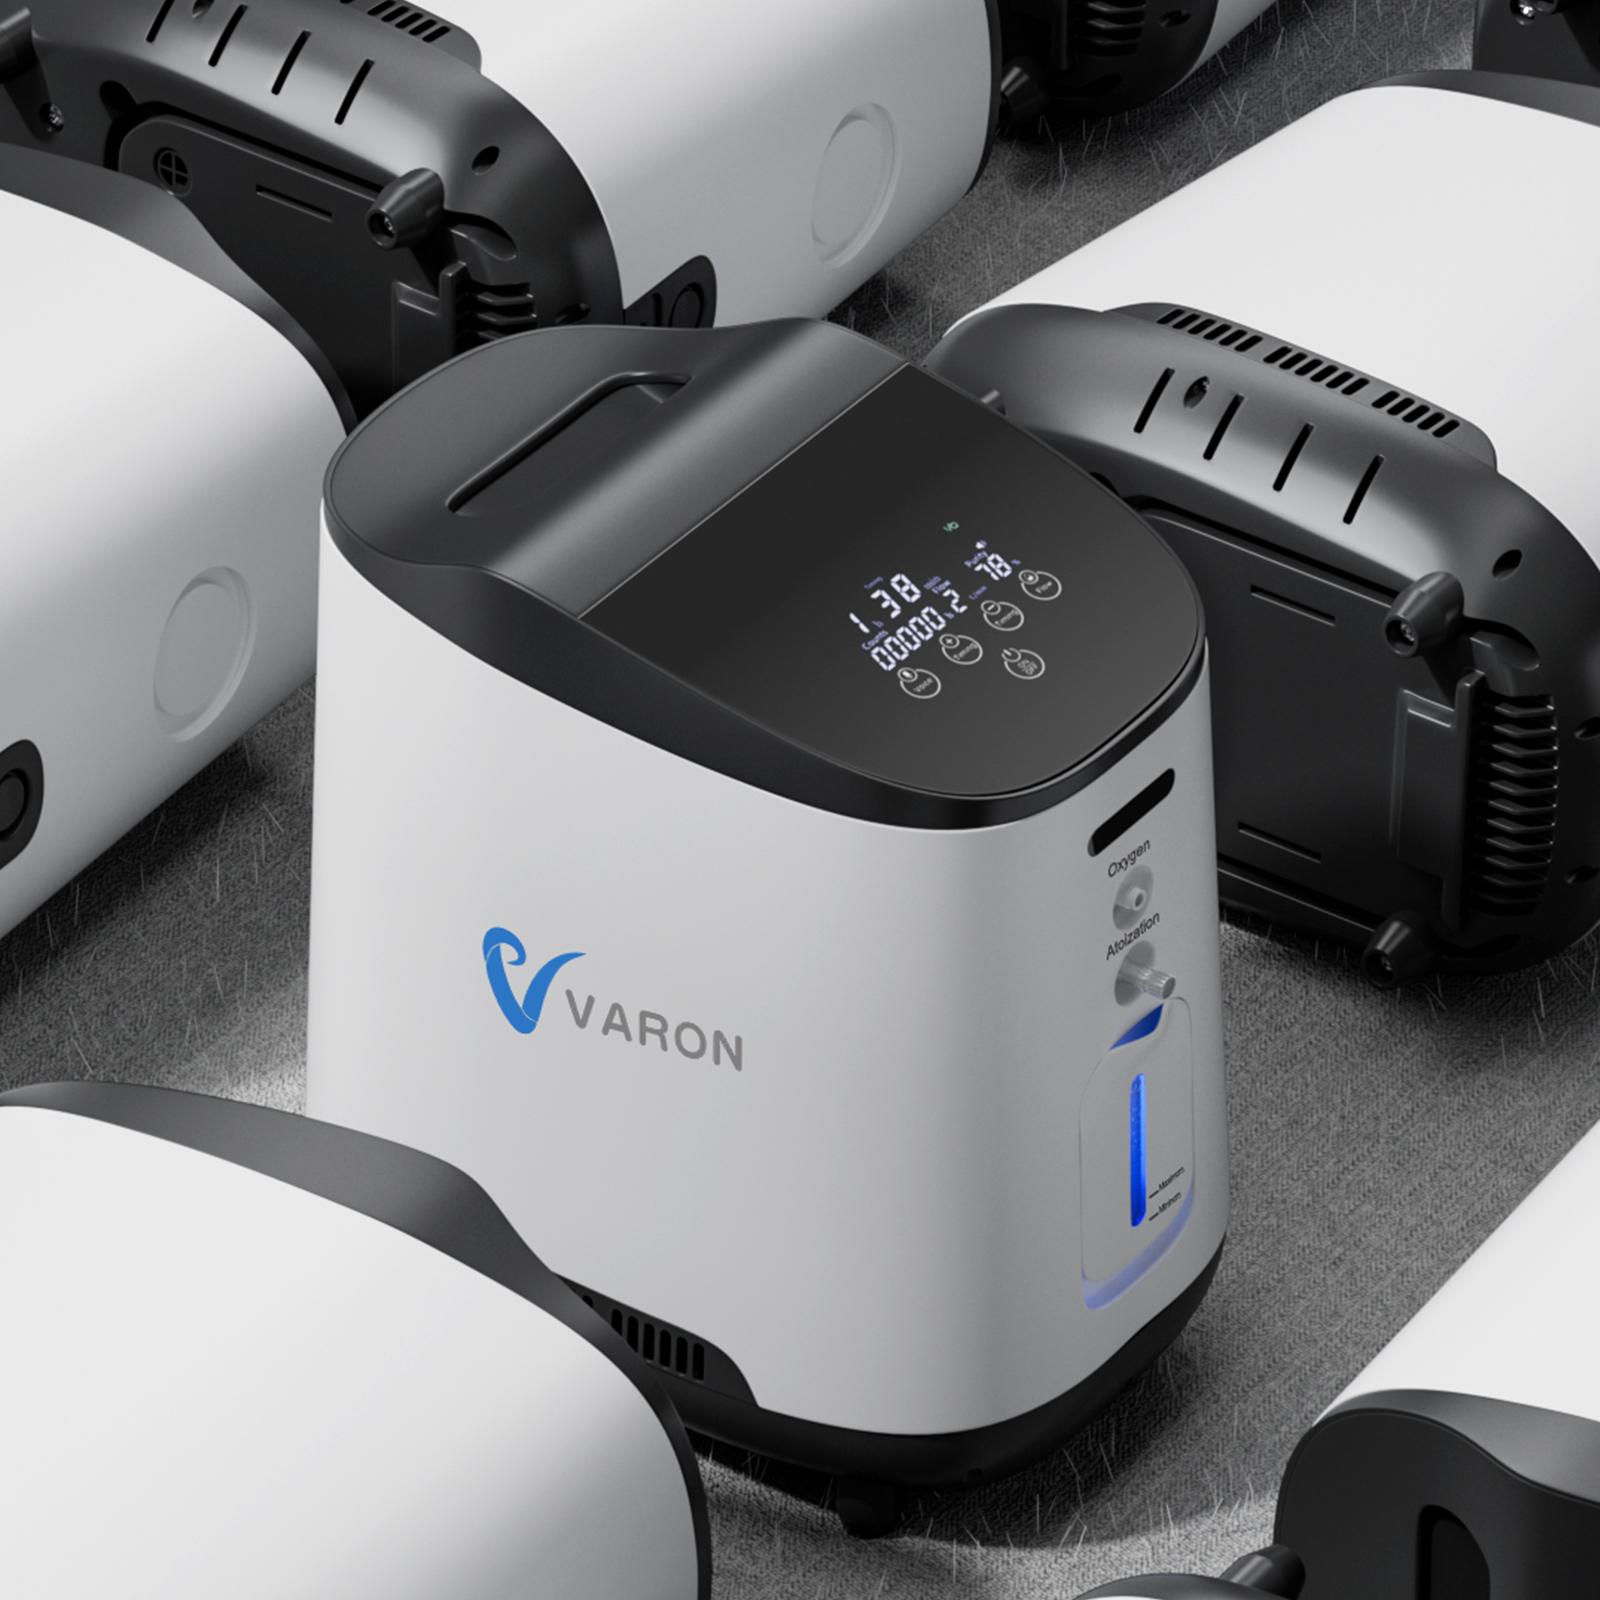 VARON Home Travel 1L-7L High Concentration Oxygene Concentrator Generator Home Health Care Equipment AC110-220V